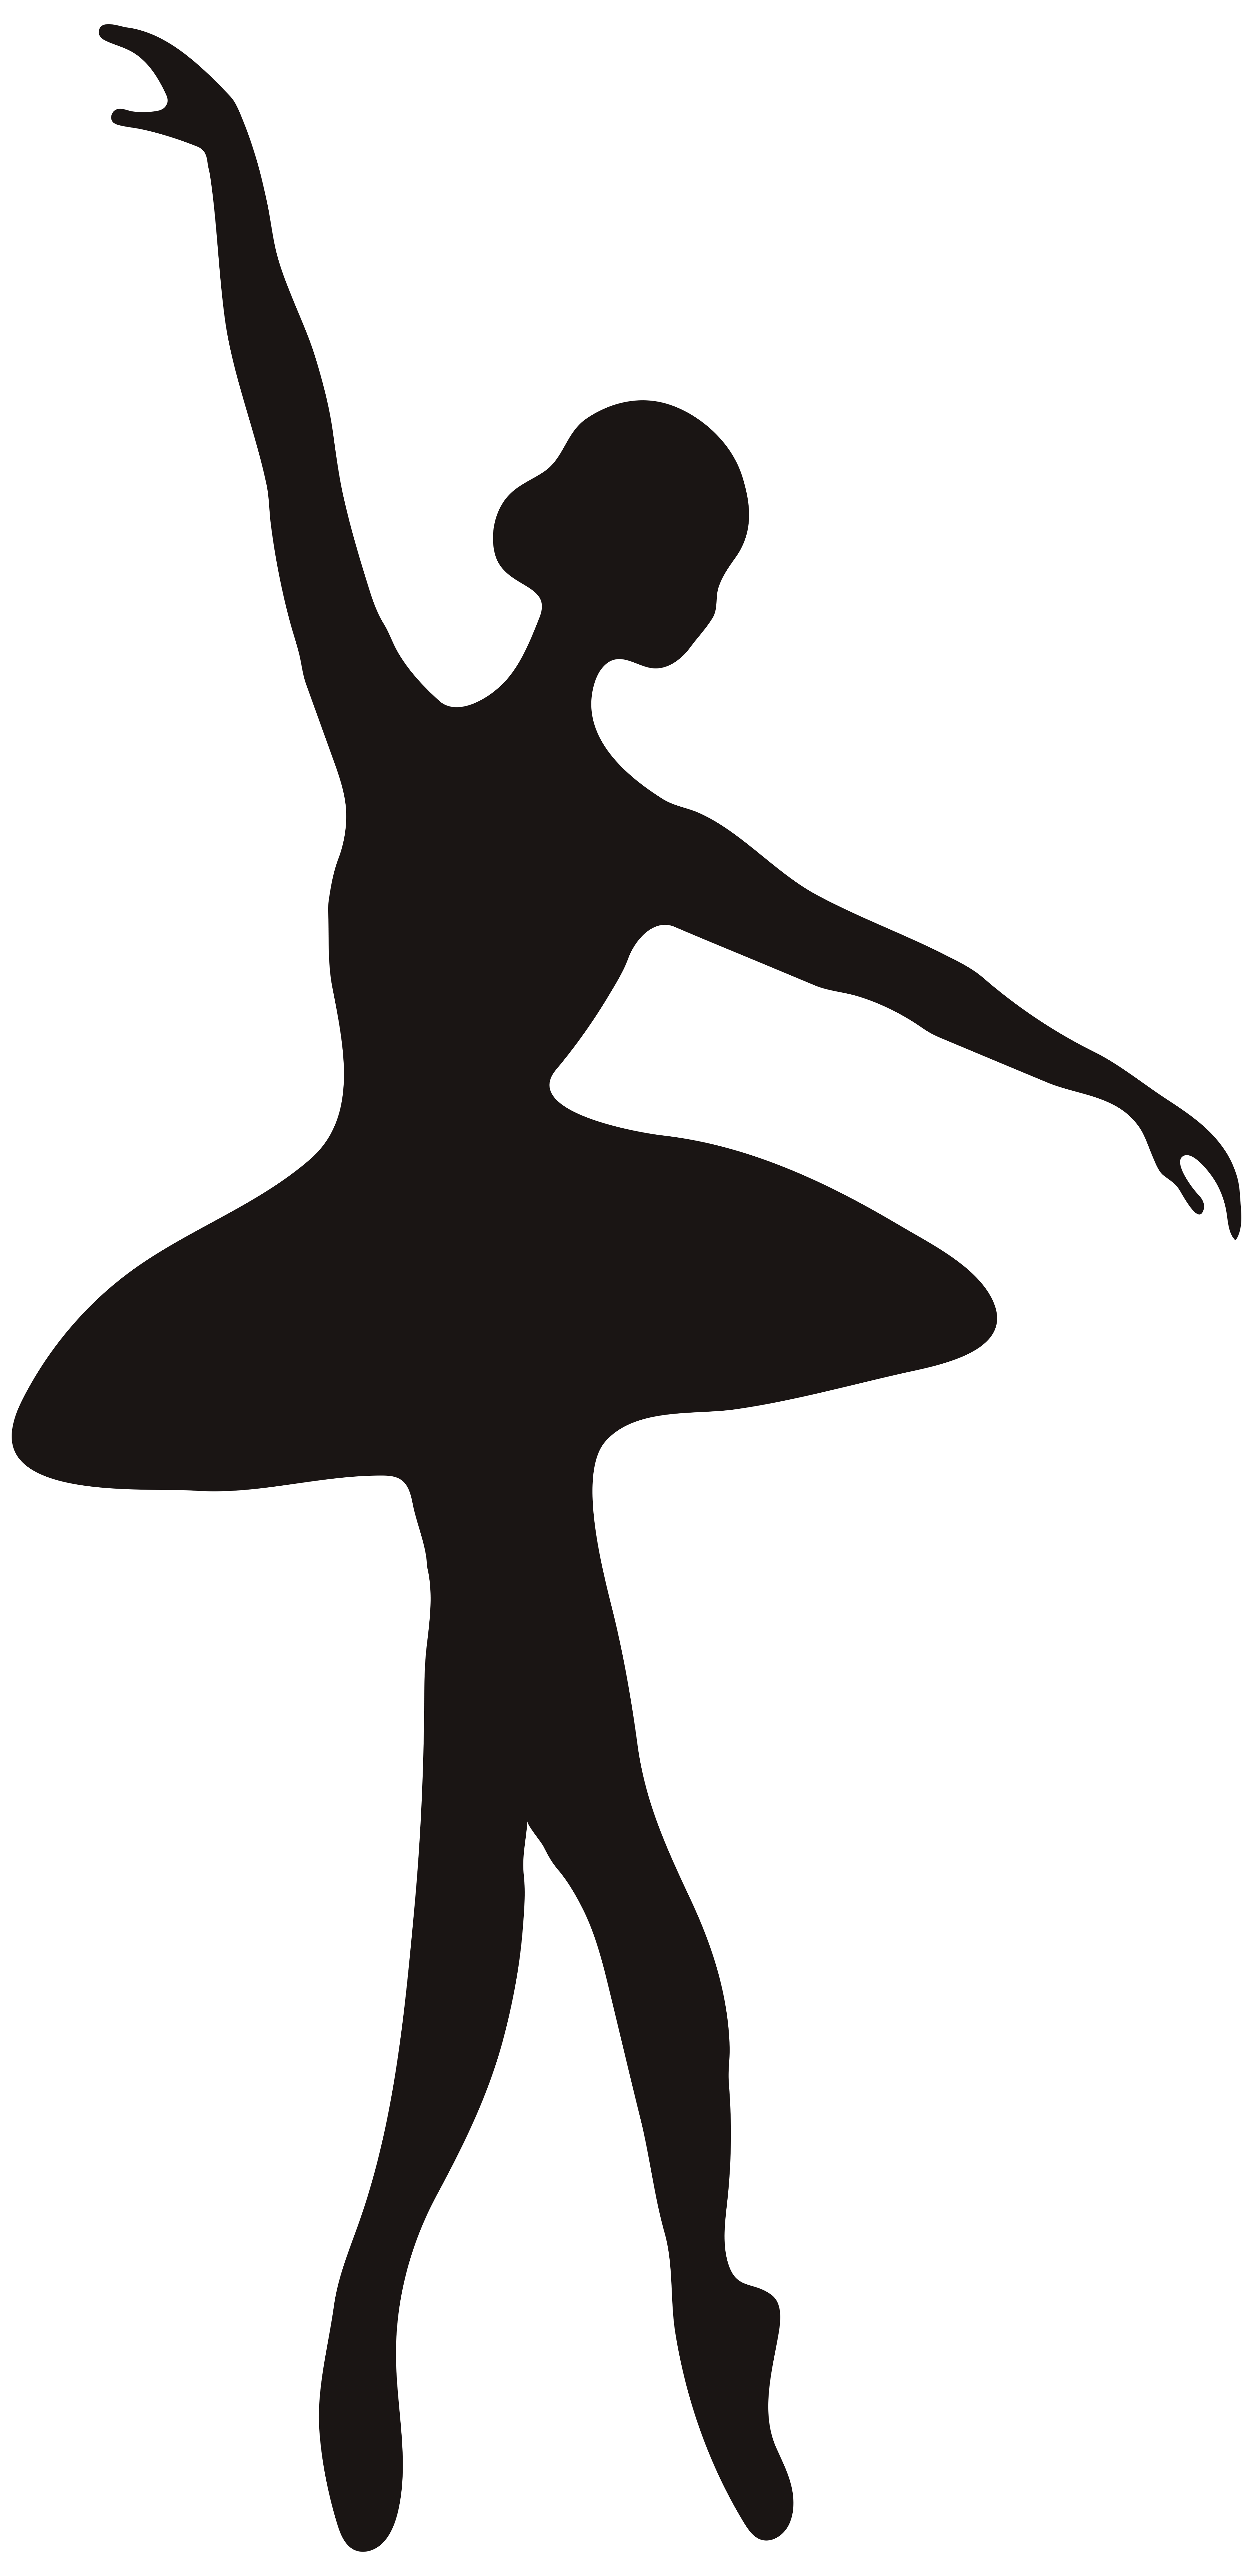 Baile Pose Silueta De Ballet Descargar Pngsvg Transparente Images And ...